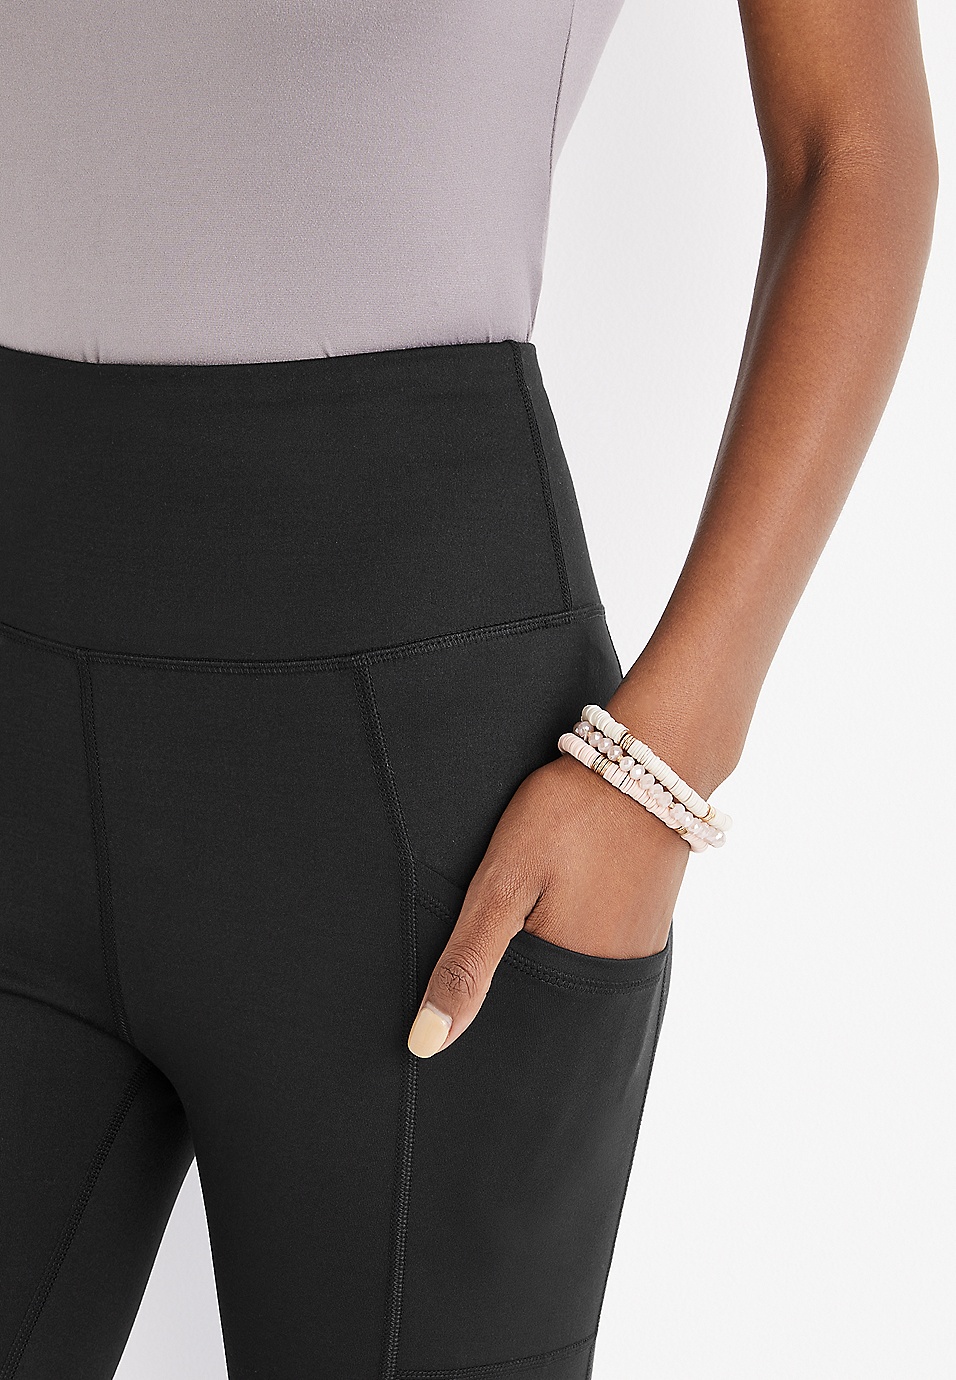 Maurices Women's Super High Rise Zipper Pocket Luxe Black Leggings